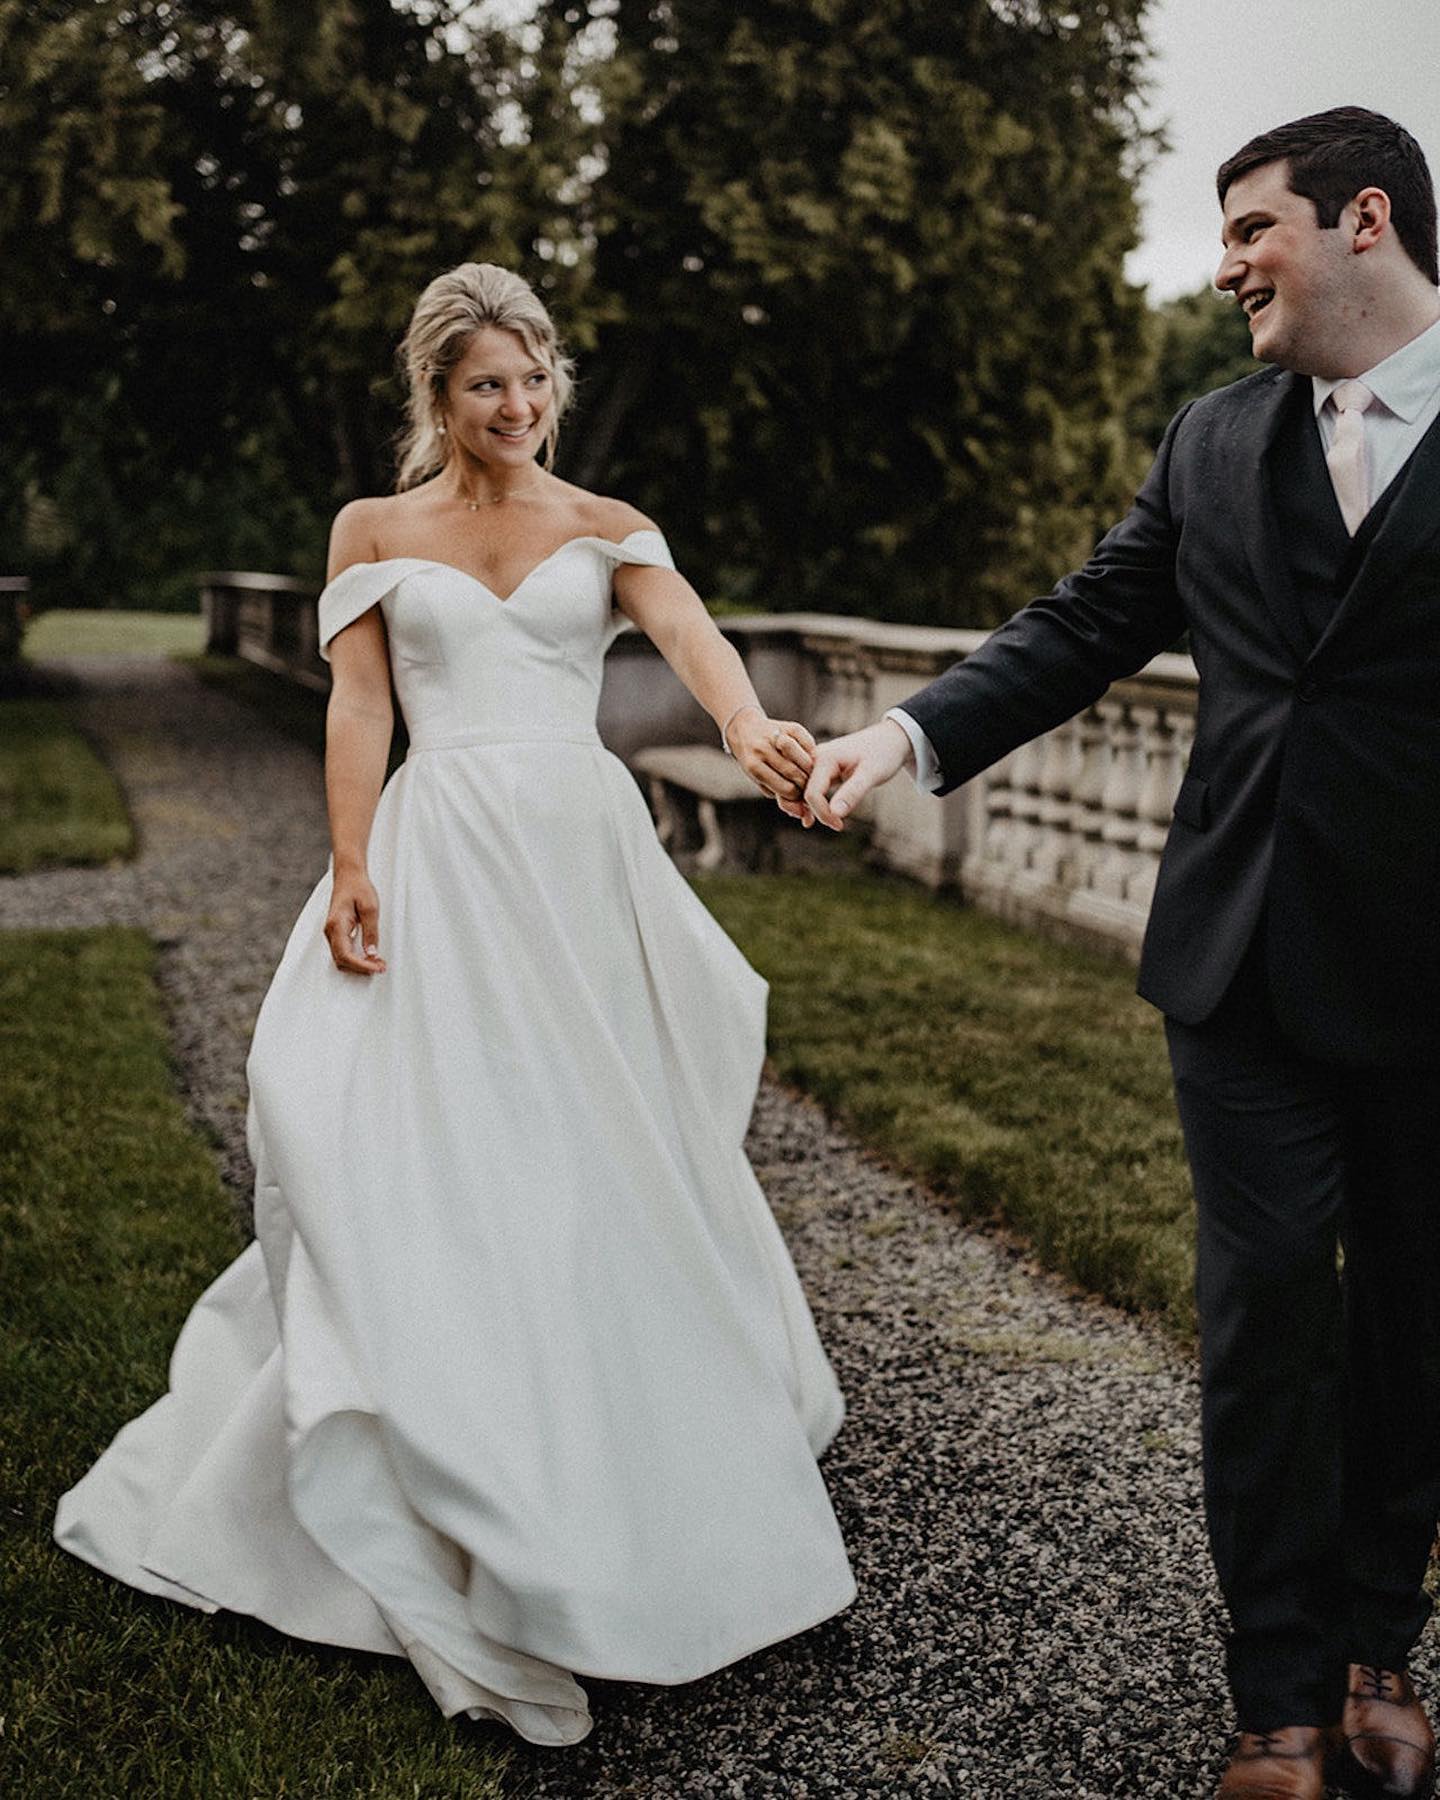 Off the Shoulder Satin Ball Gown Wedding Dress - bride smiling